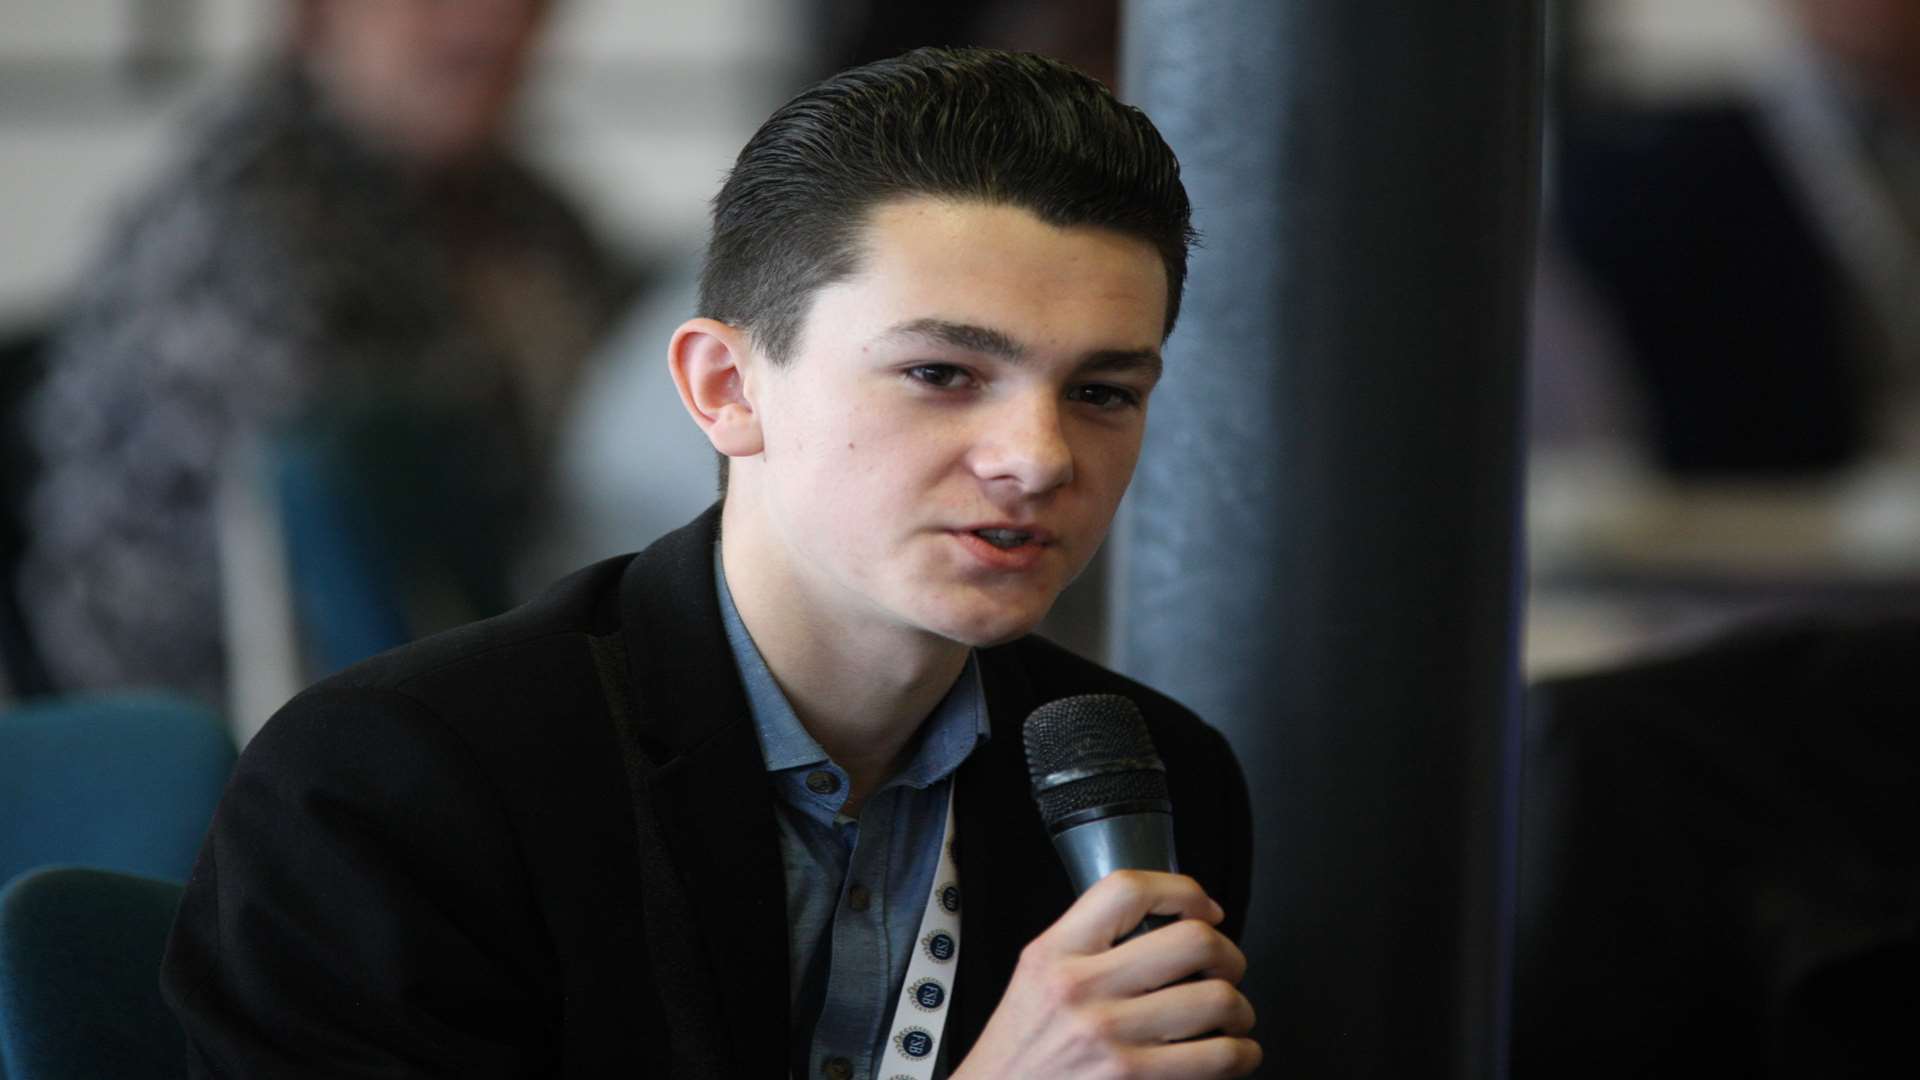 Young entrepreneur Ben Towers, 17, is a sought-after public speaker